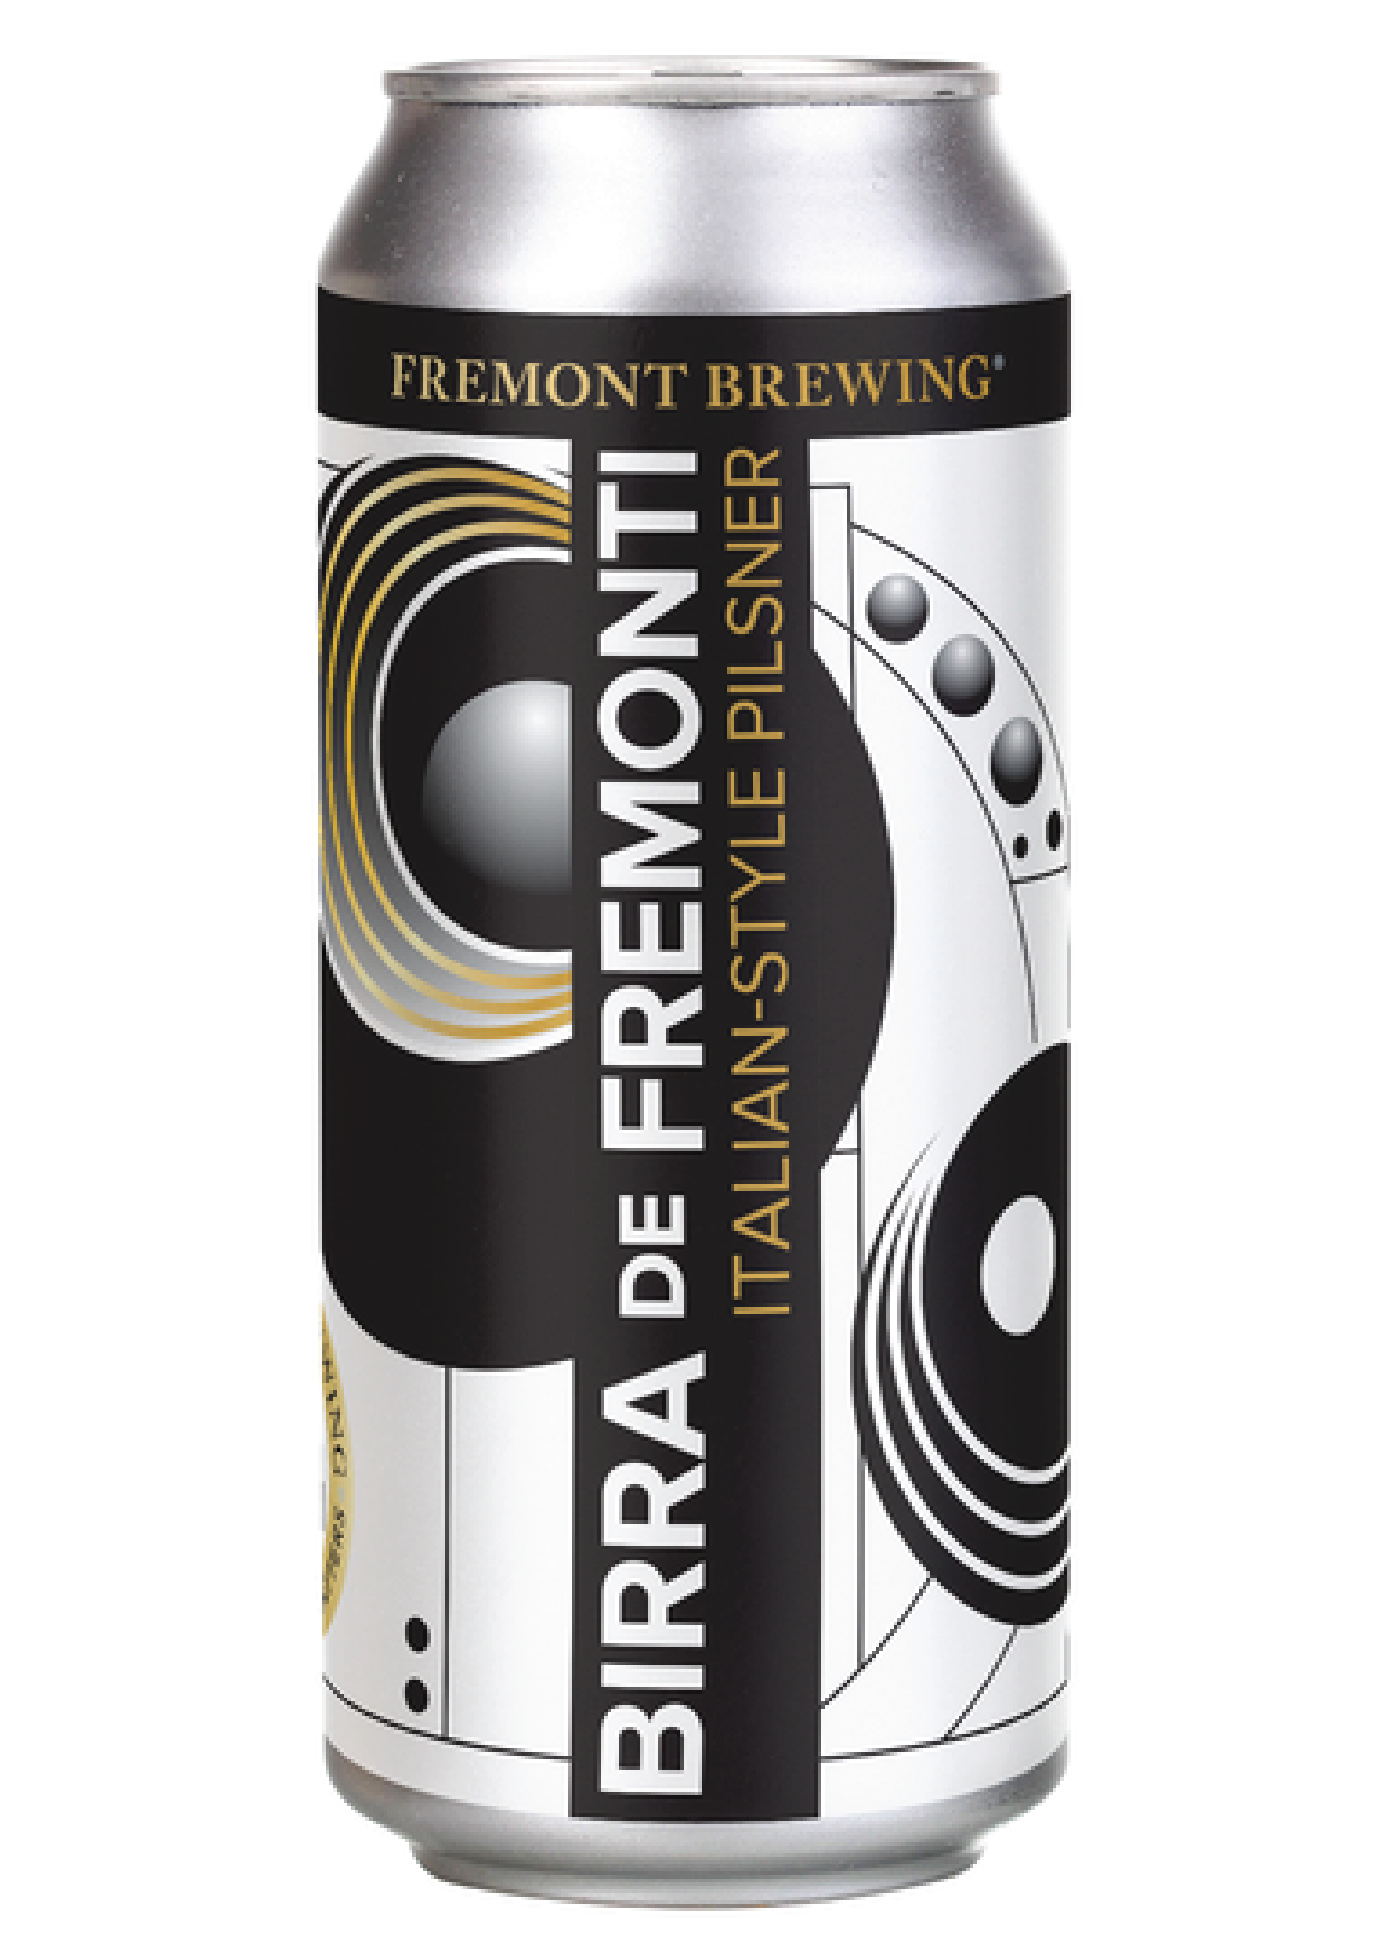 Birra De Fremonti